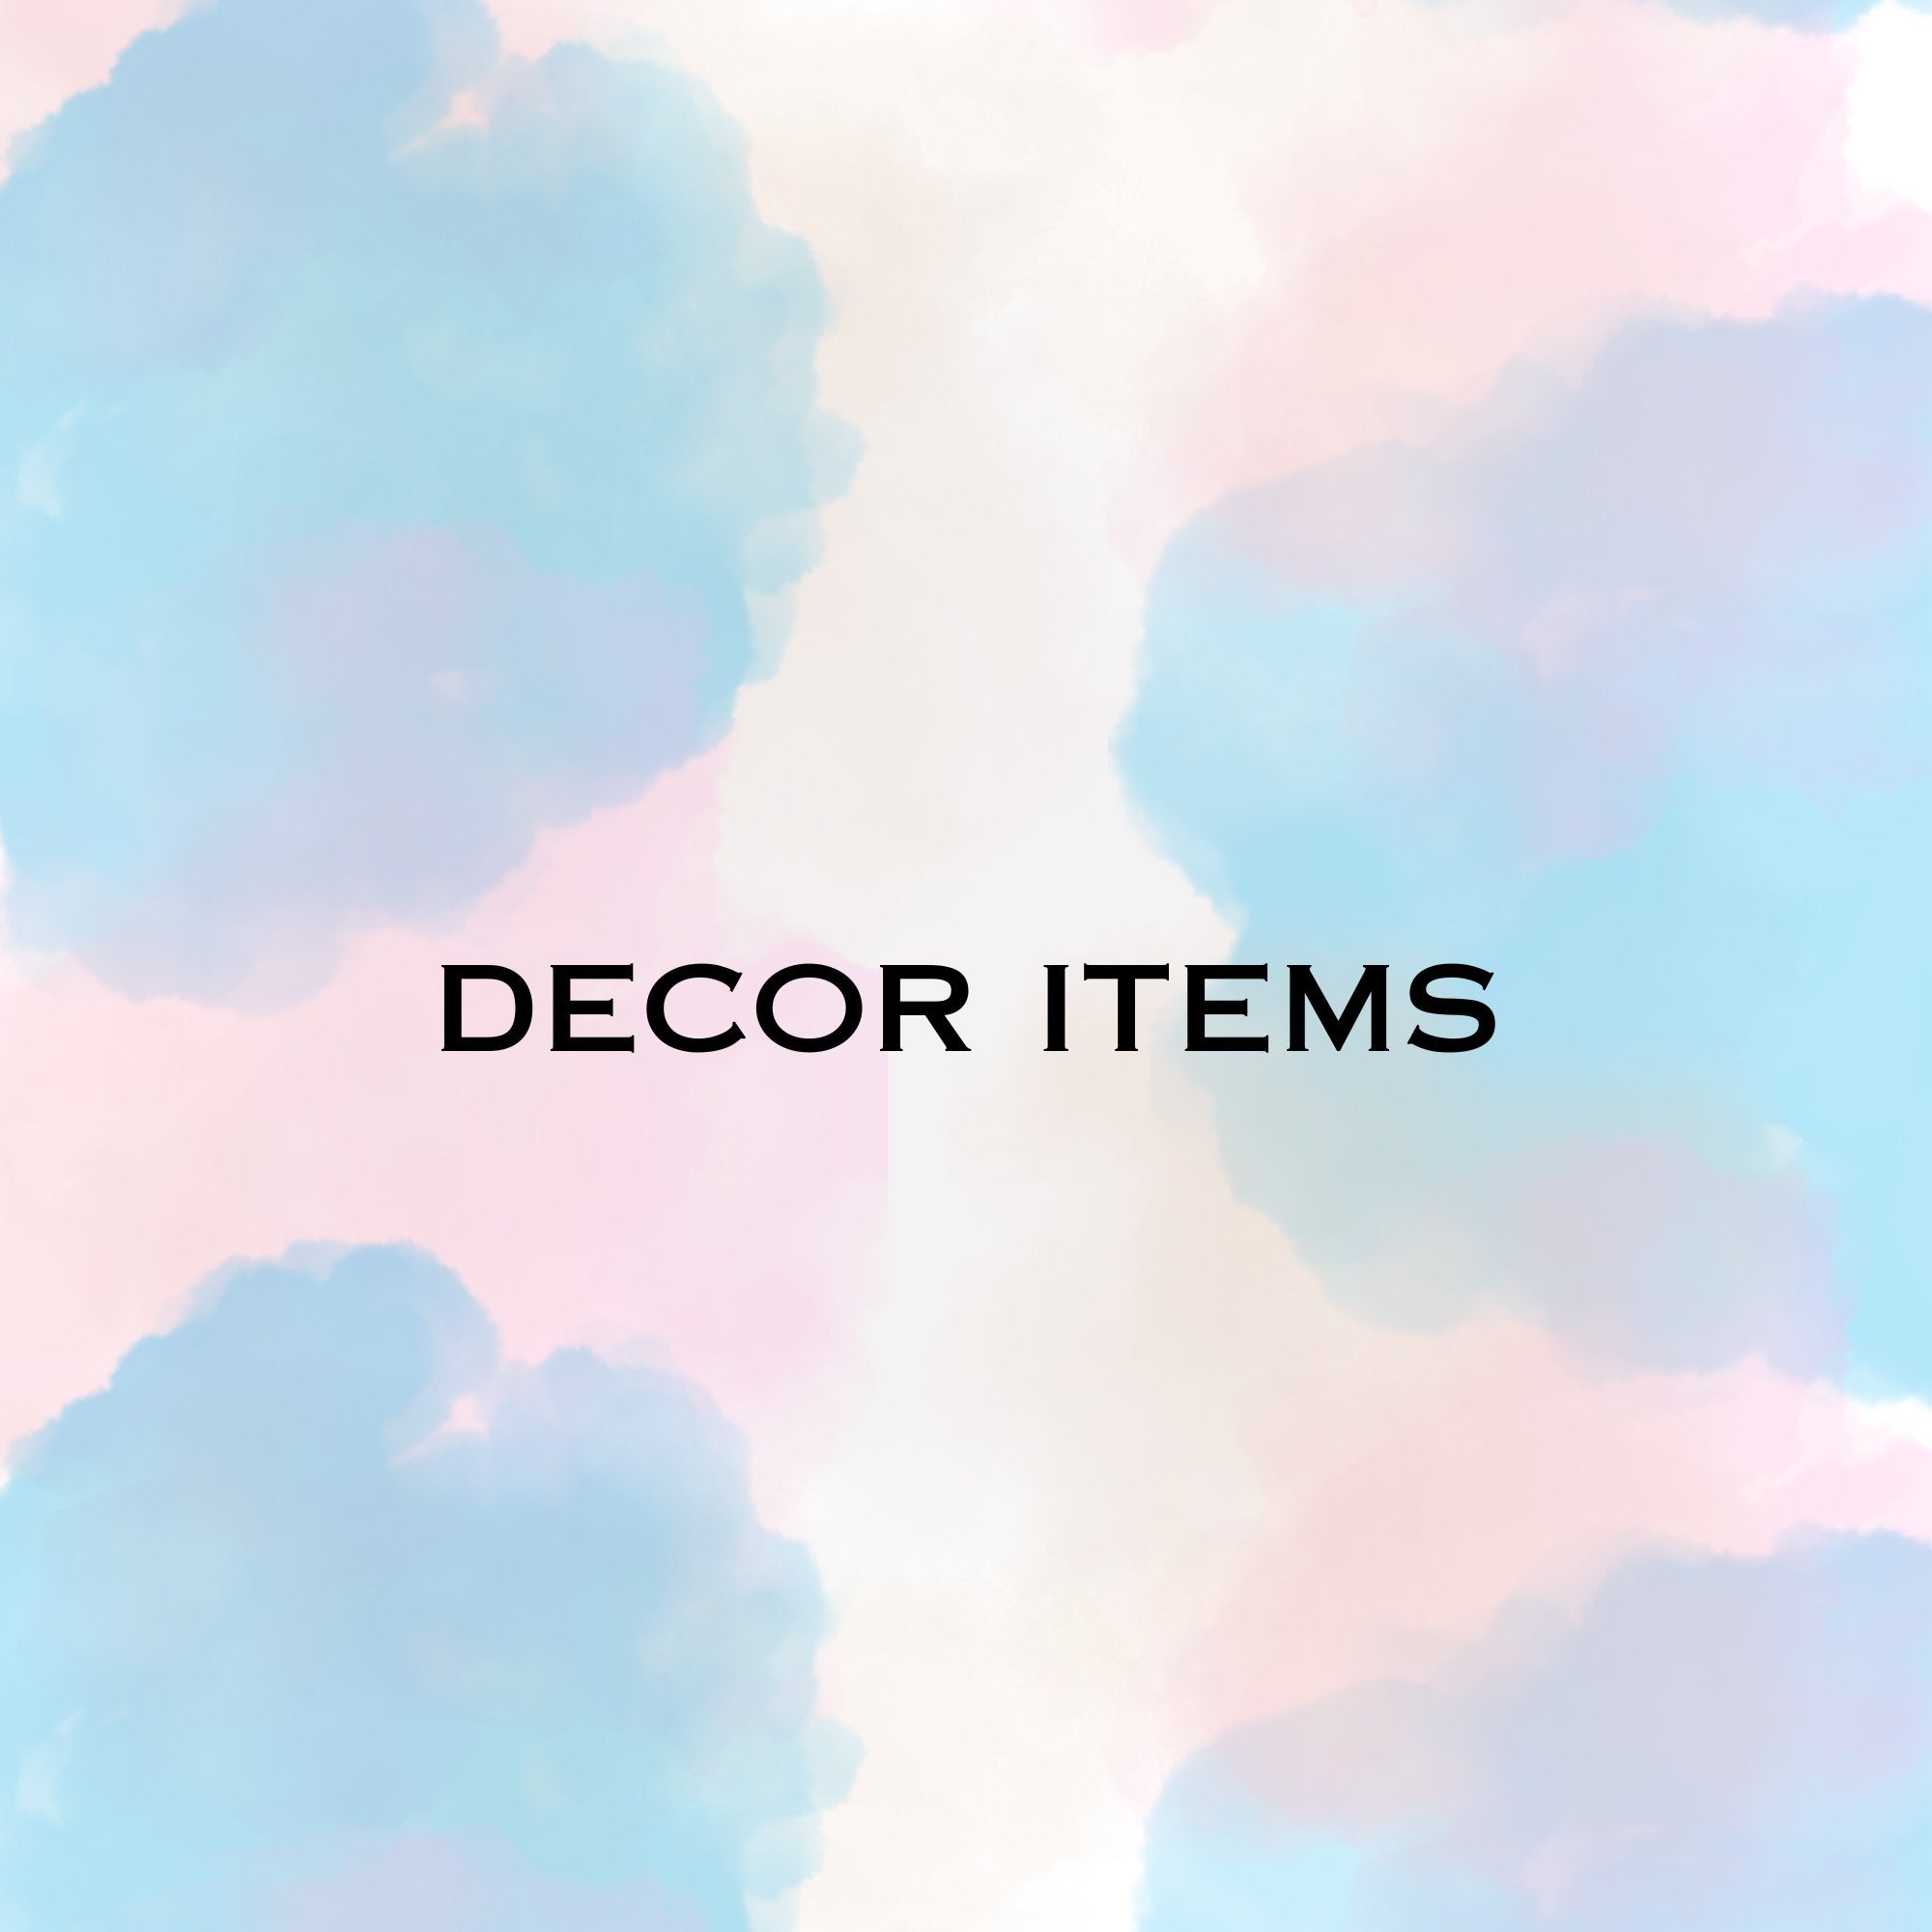 Decor items